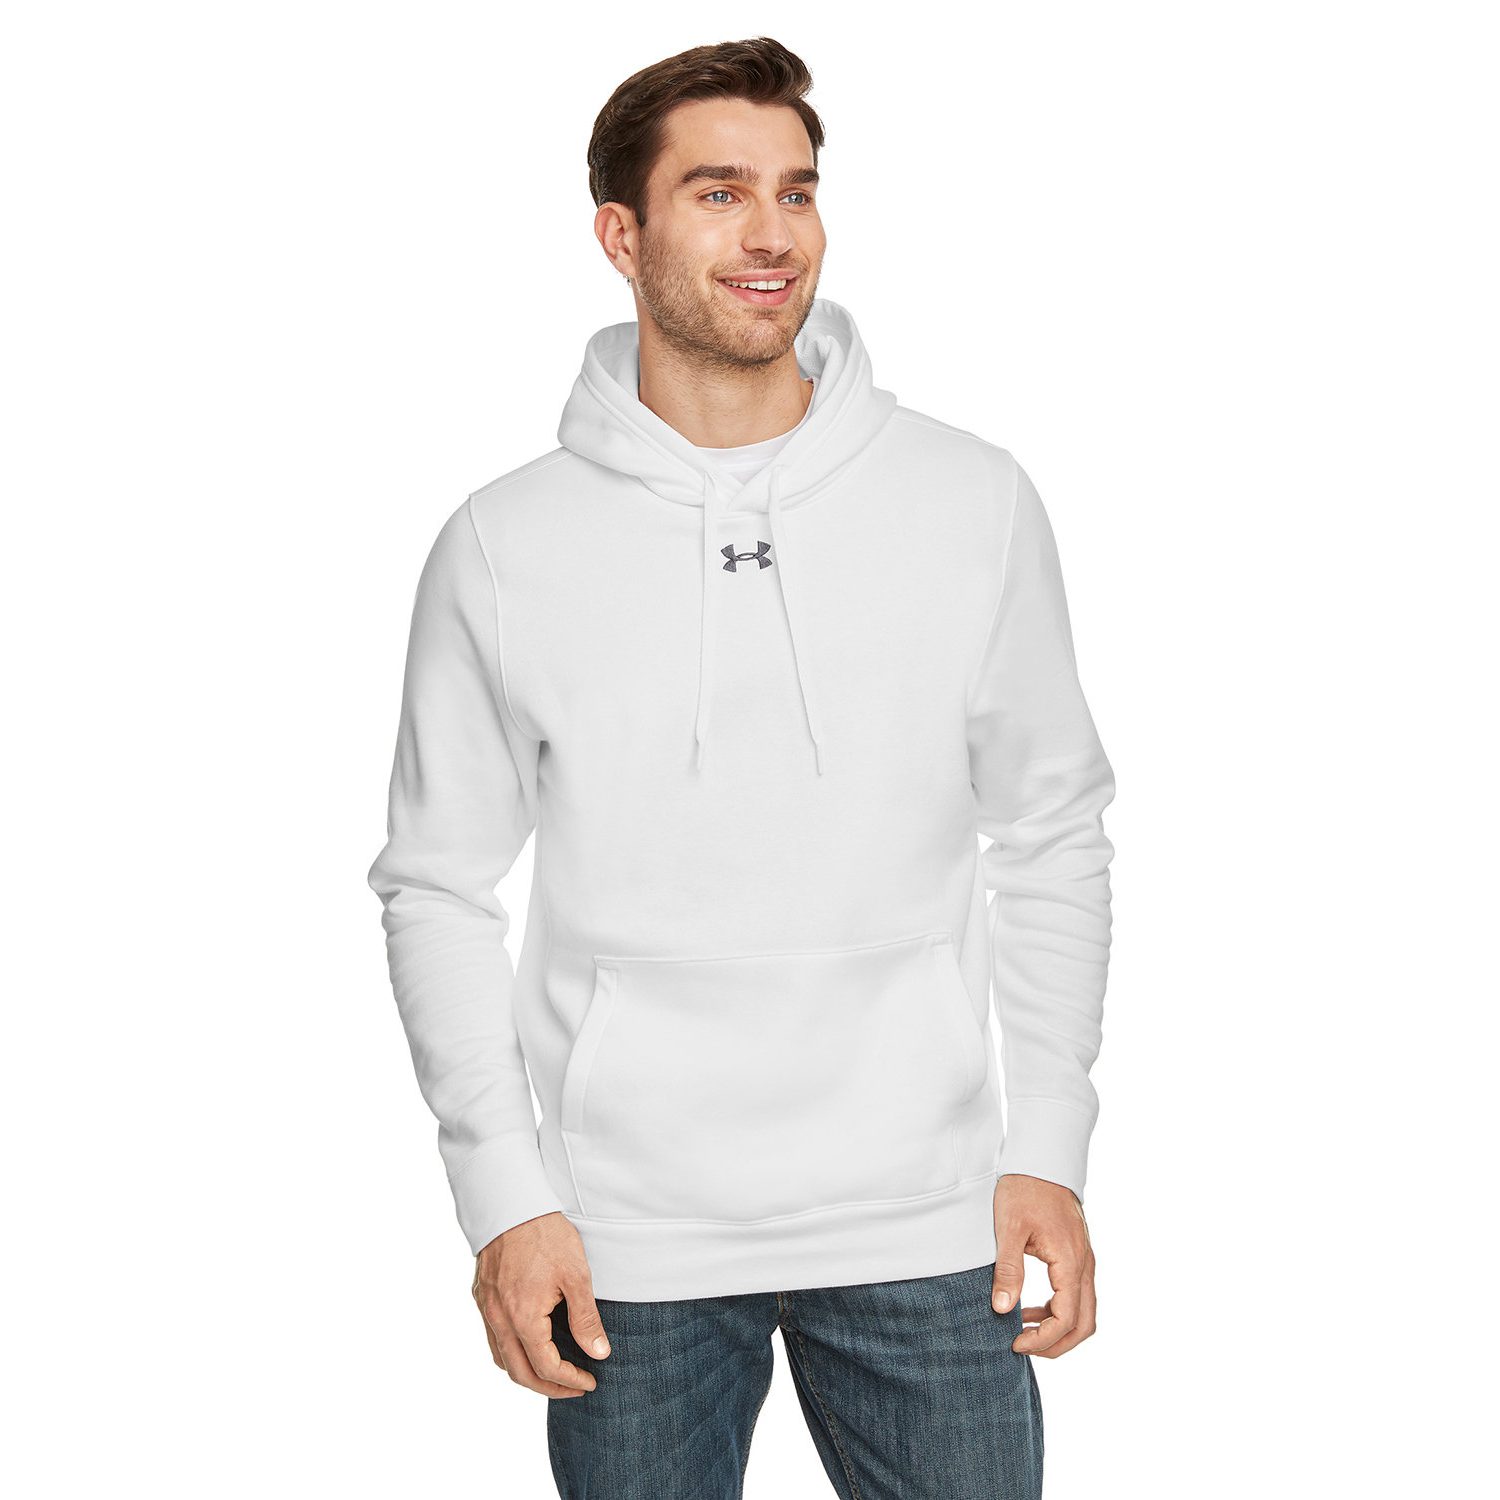 UNDER ARMOUR® Men's Hustle Pullover Hooded Sweatshirt #1300123 White